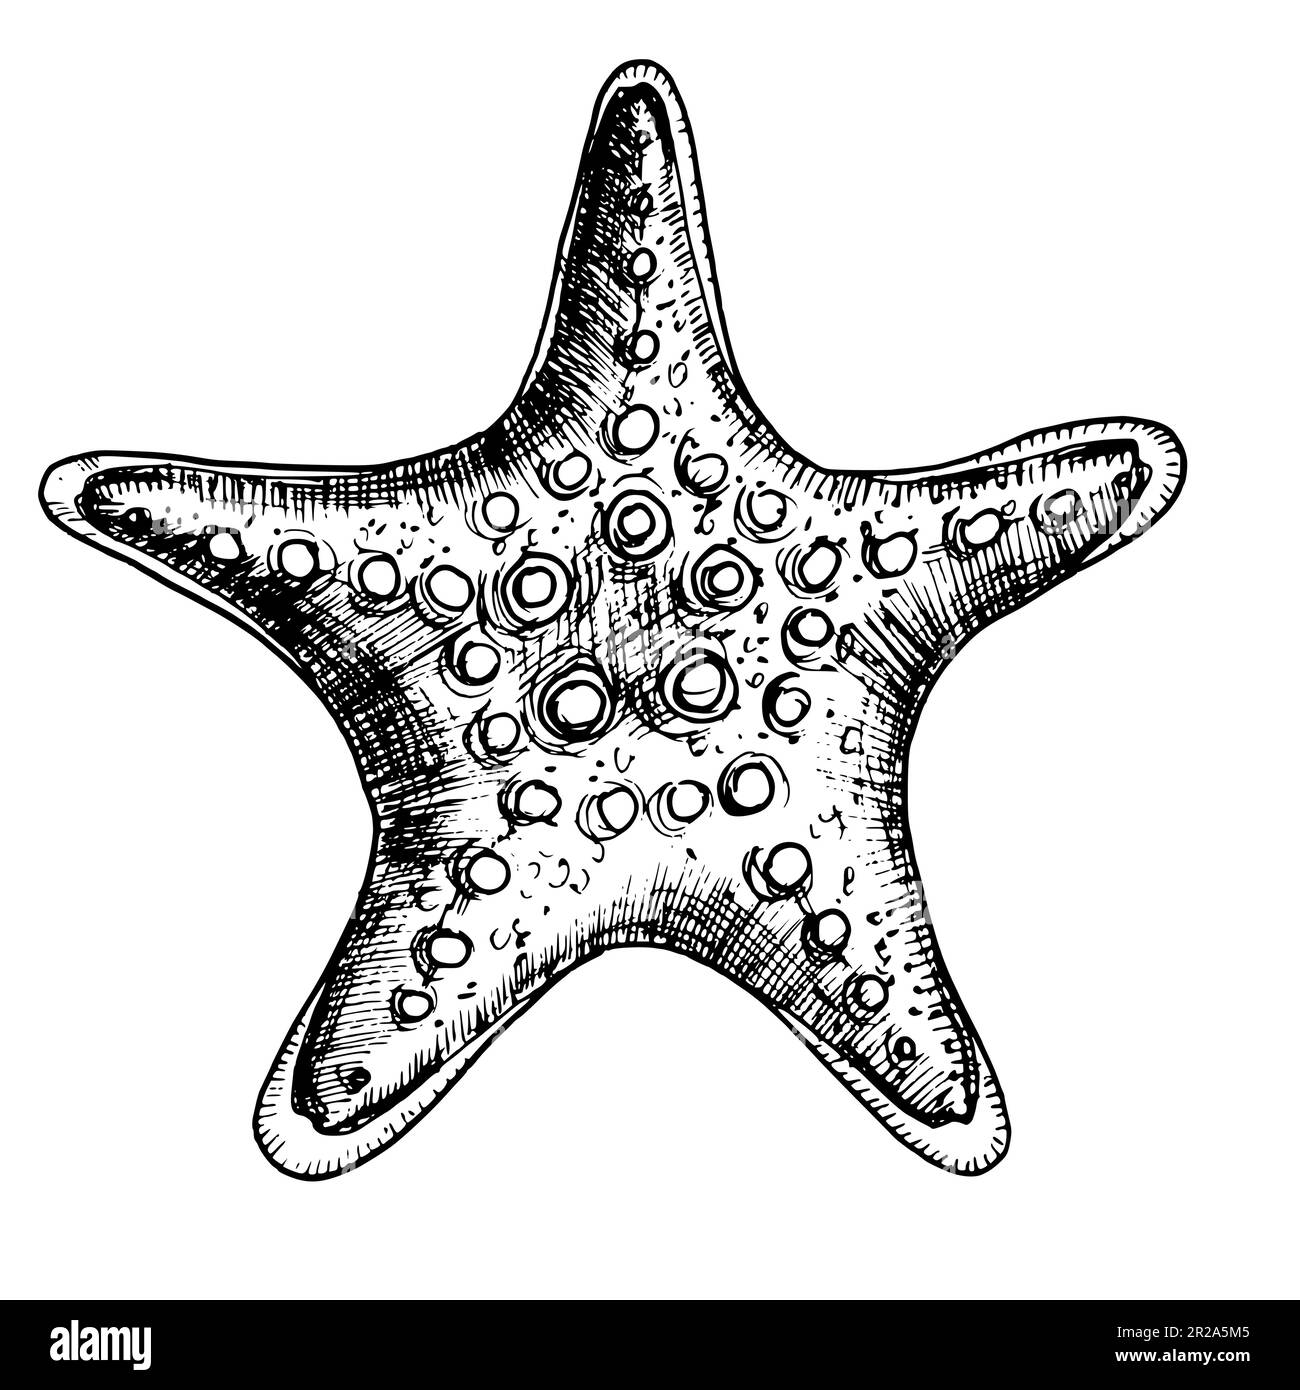 Starfish vector illustration. Hand drawn drawing of Star Fish on